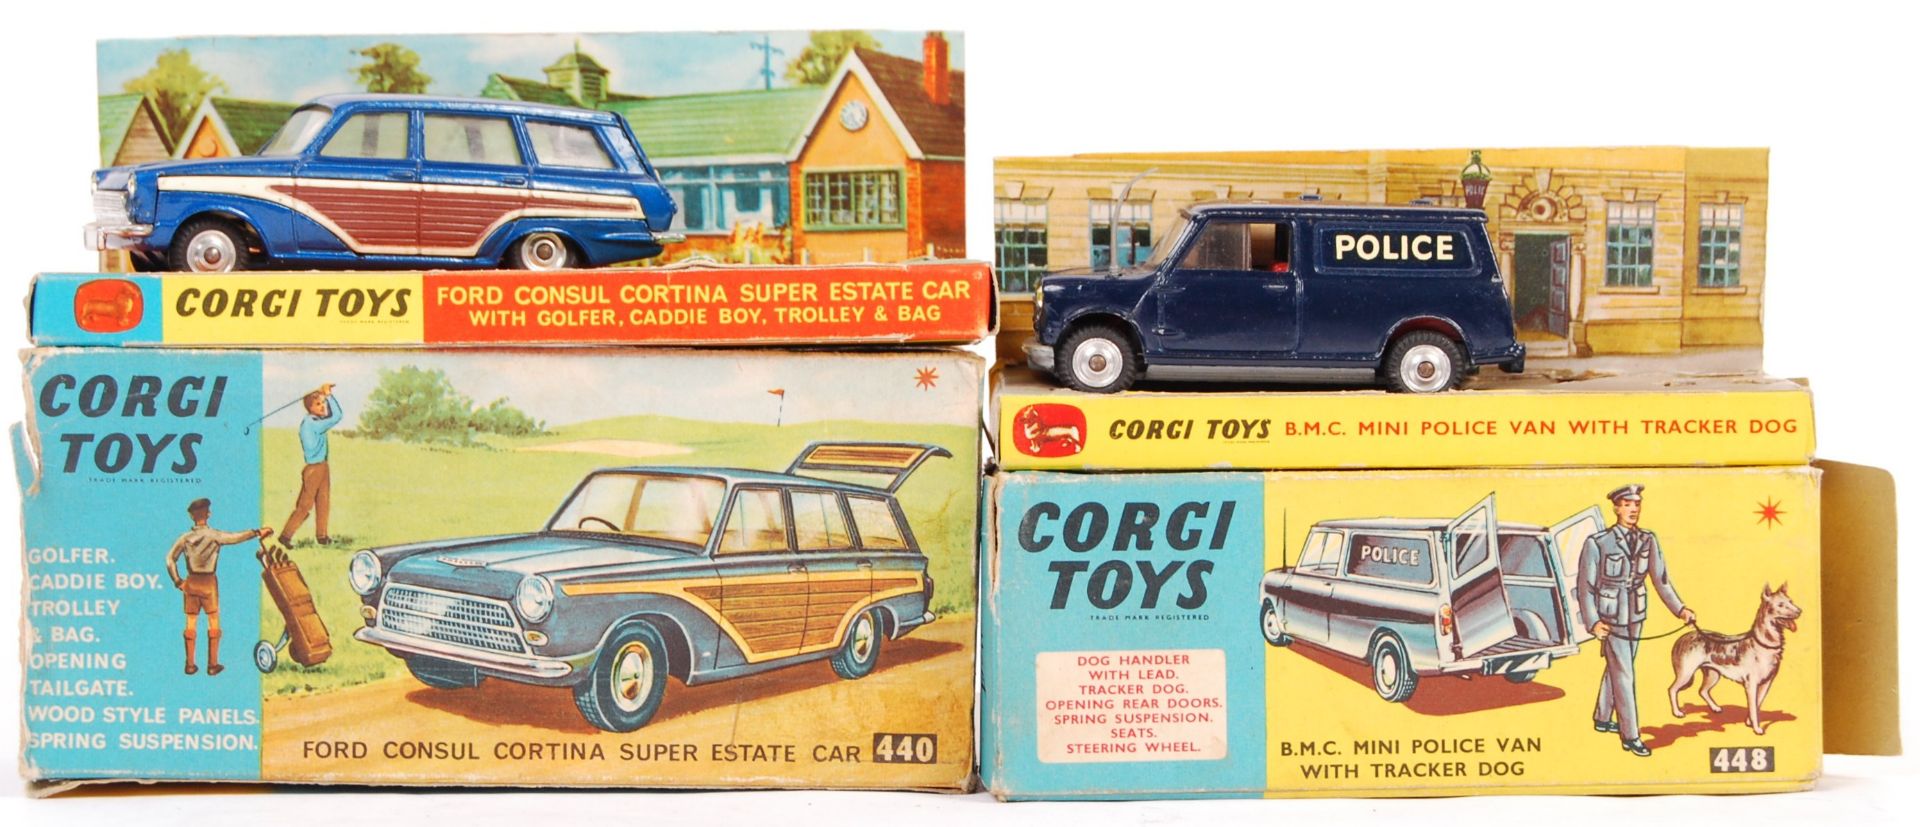 TWO ORIGINAL BOXED 1960'S CORGI TOYS MADE MODELS.